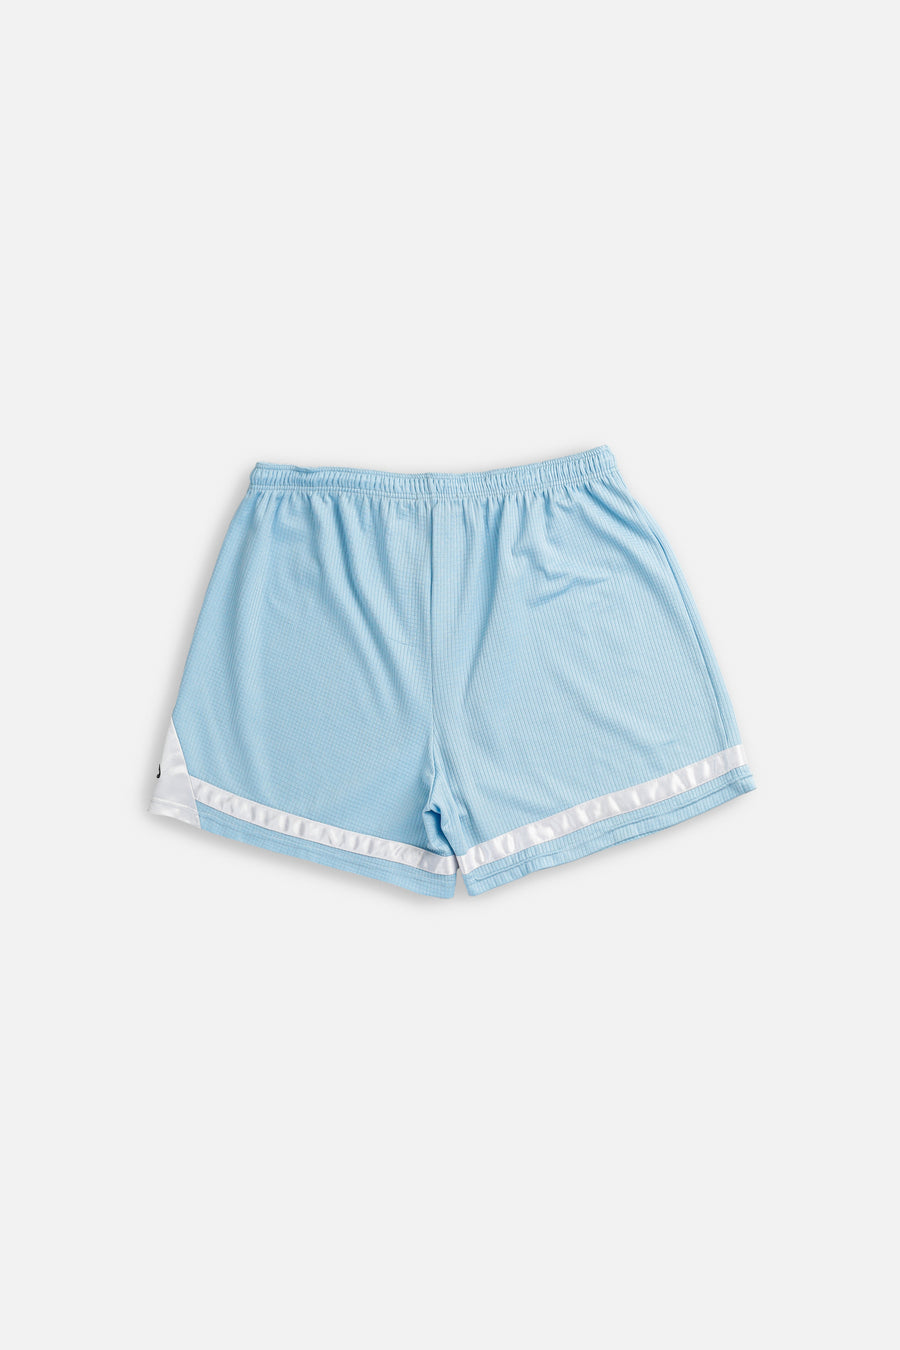 Vintage Fila Shorts - L